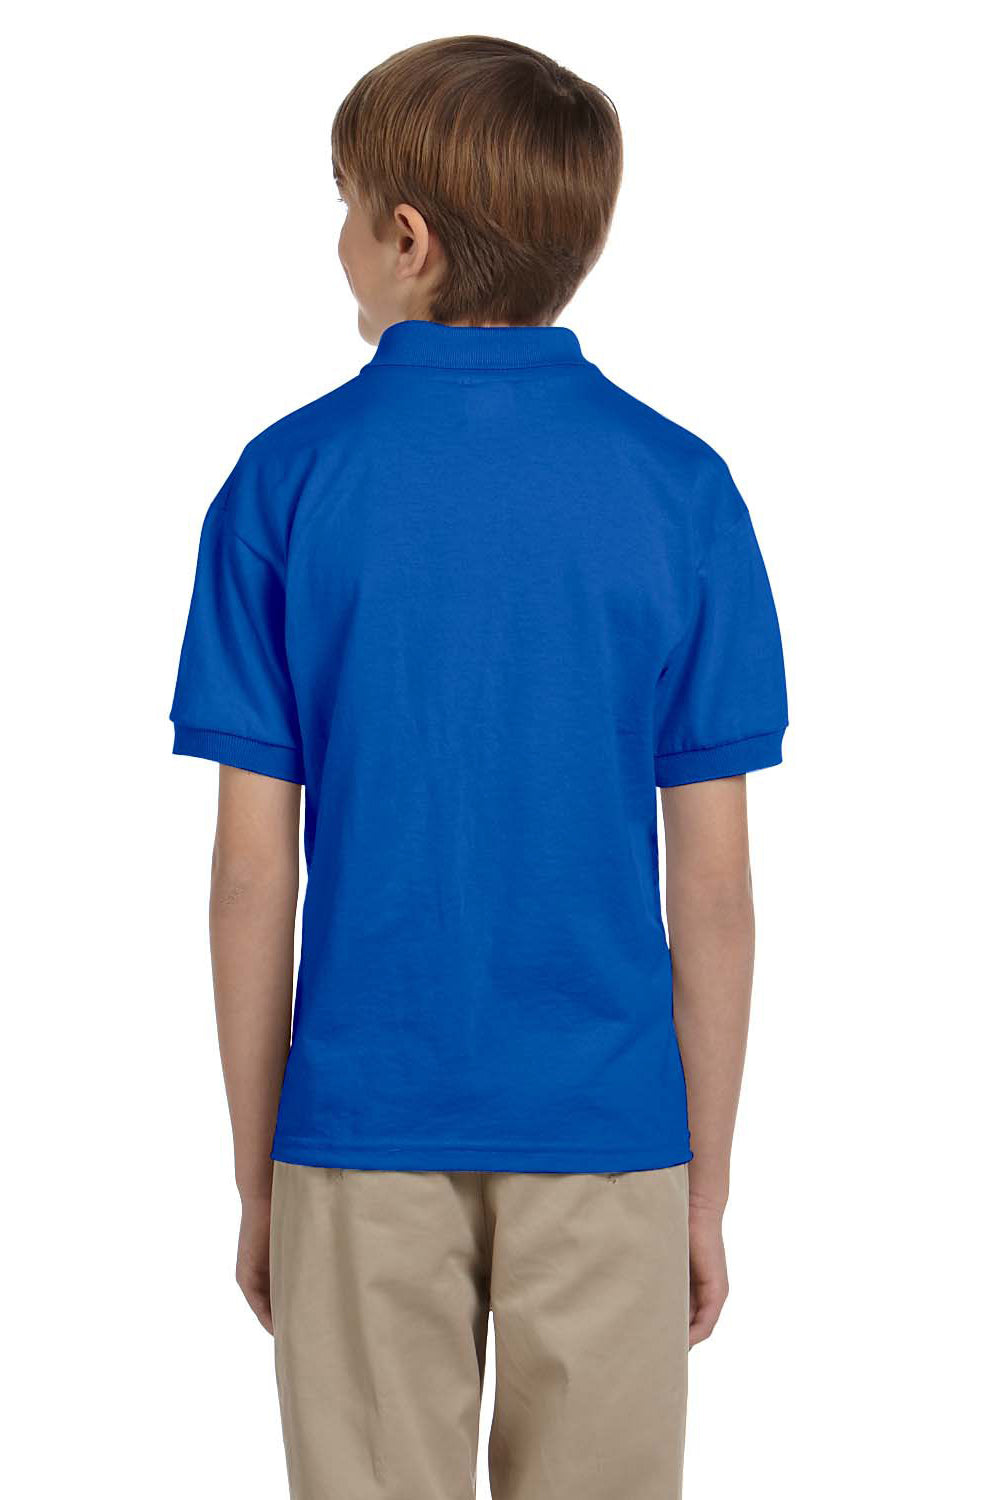 Gildan G880B Youth DryBlend Moisture Wicking Short Sleeve Polo Shirt Royal Blue Back